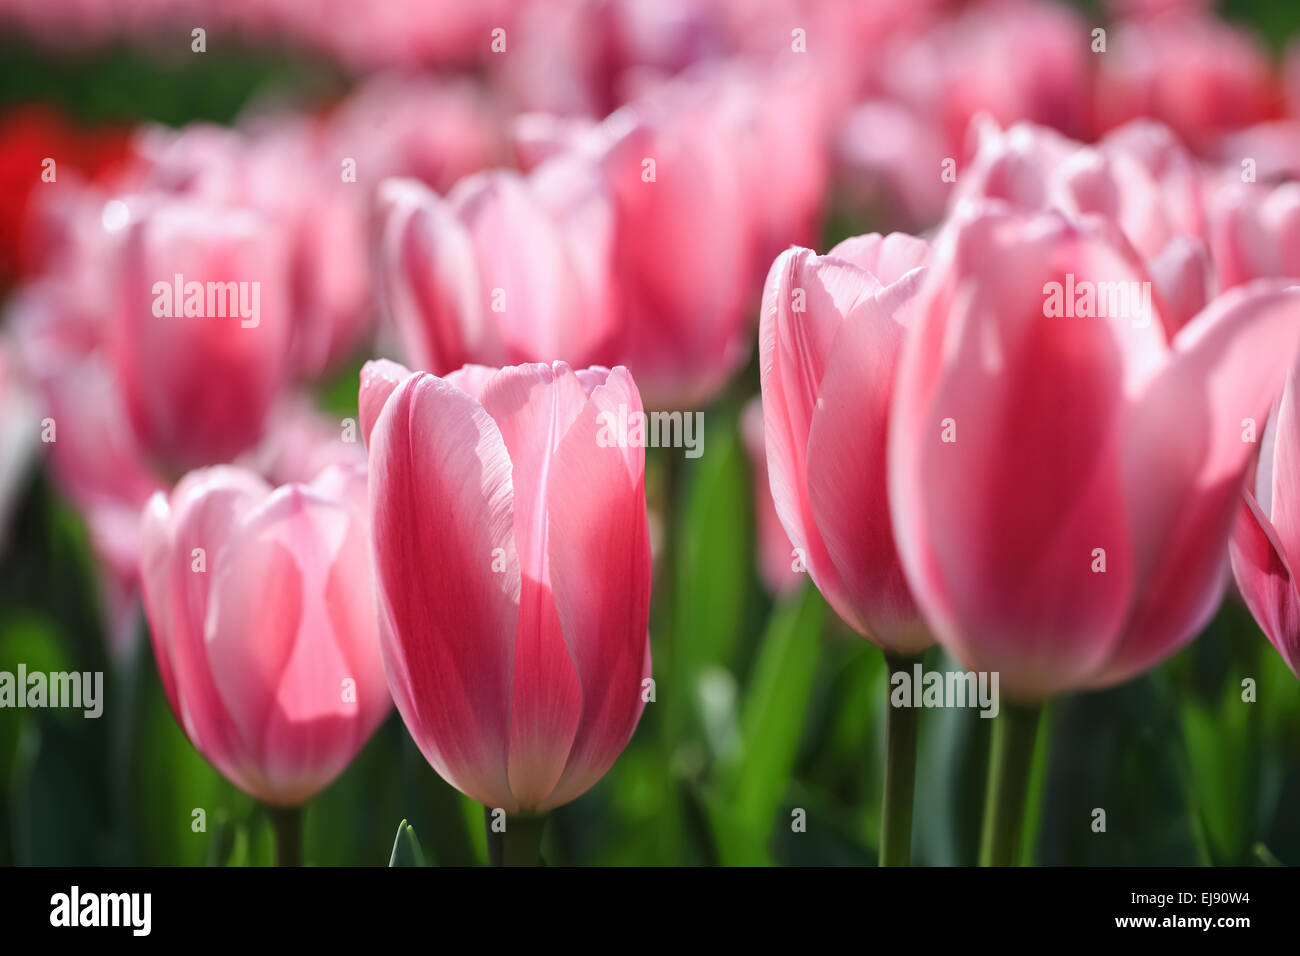 pink tulip flowers in full bloom Stock Photo